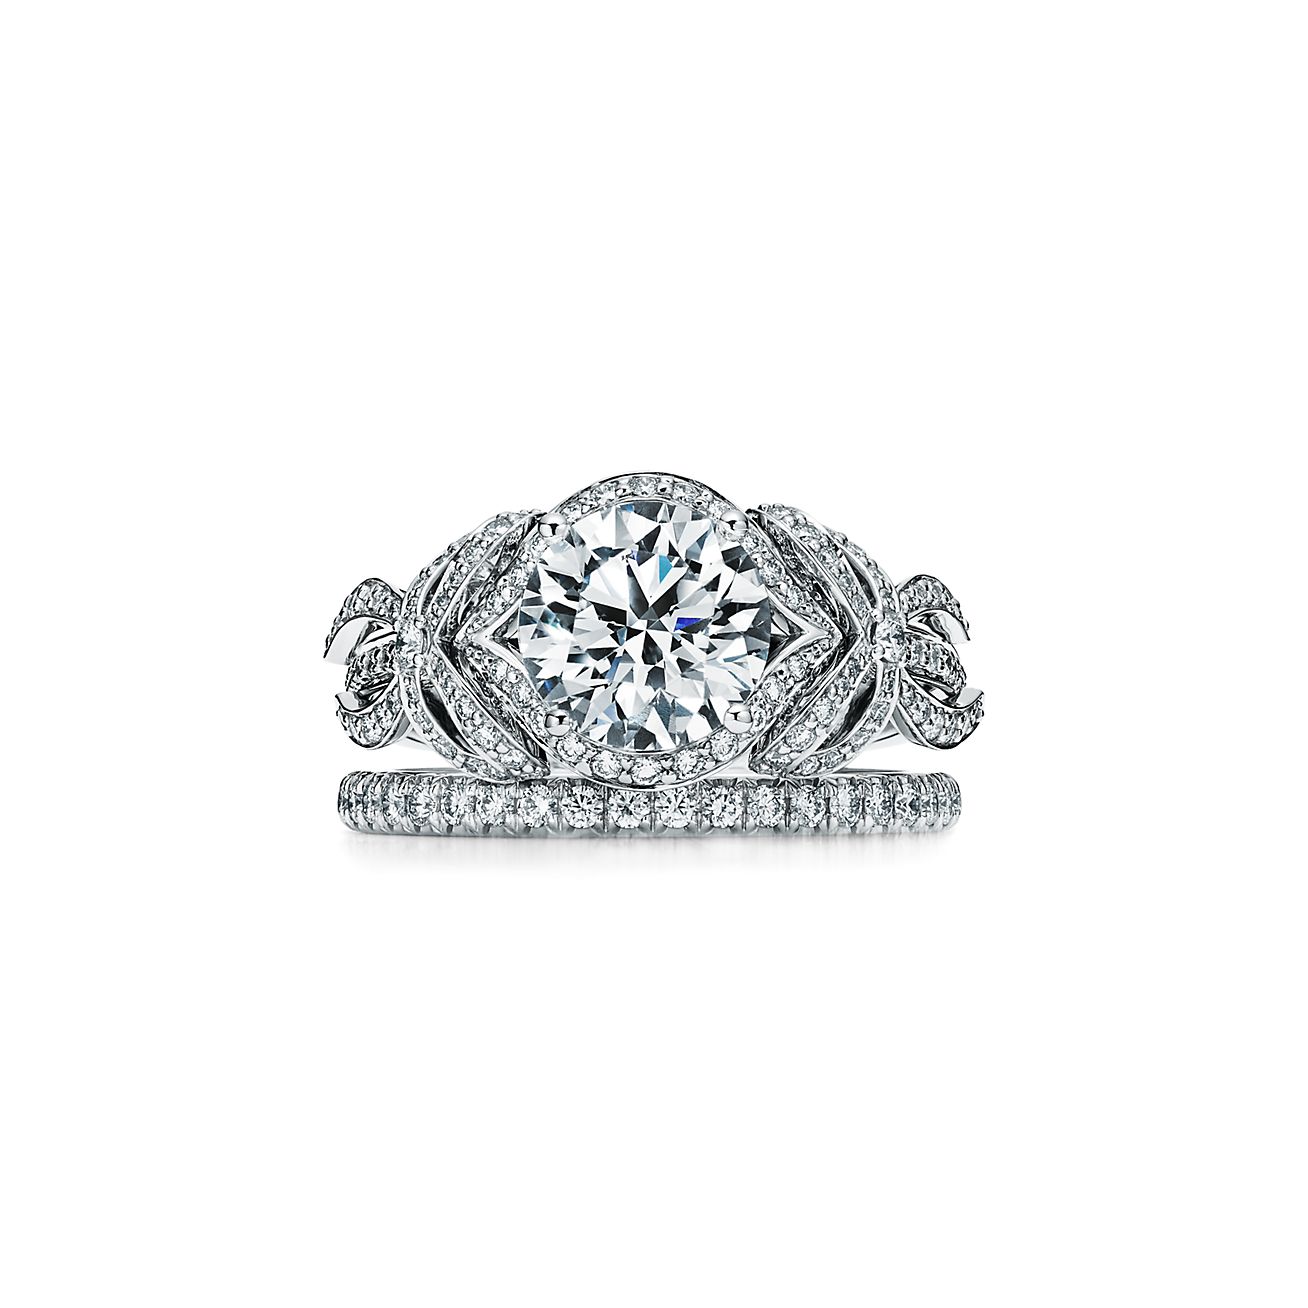 Tiffany Bow ribbon engagement ring in 